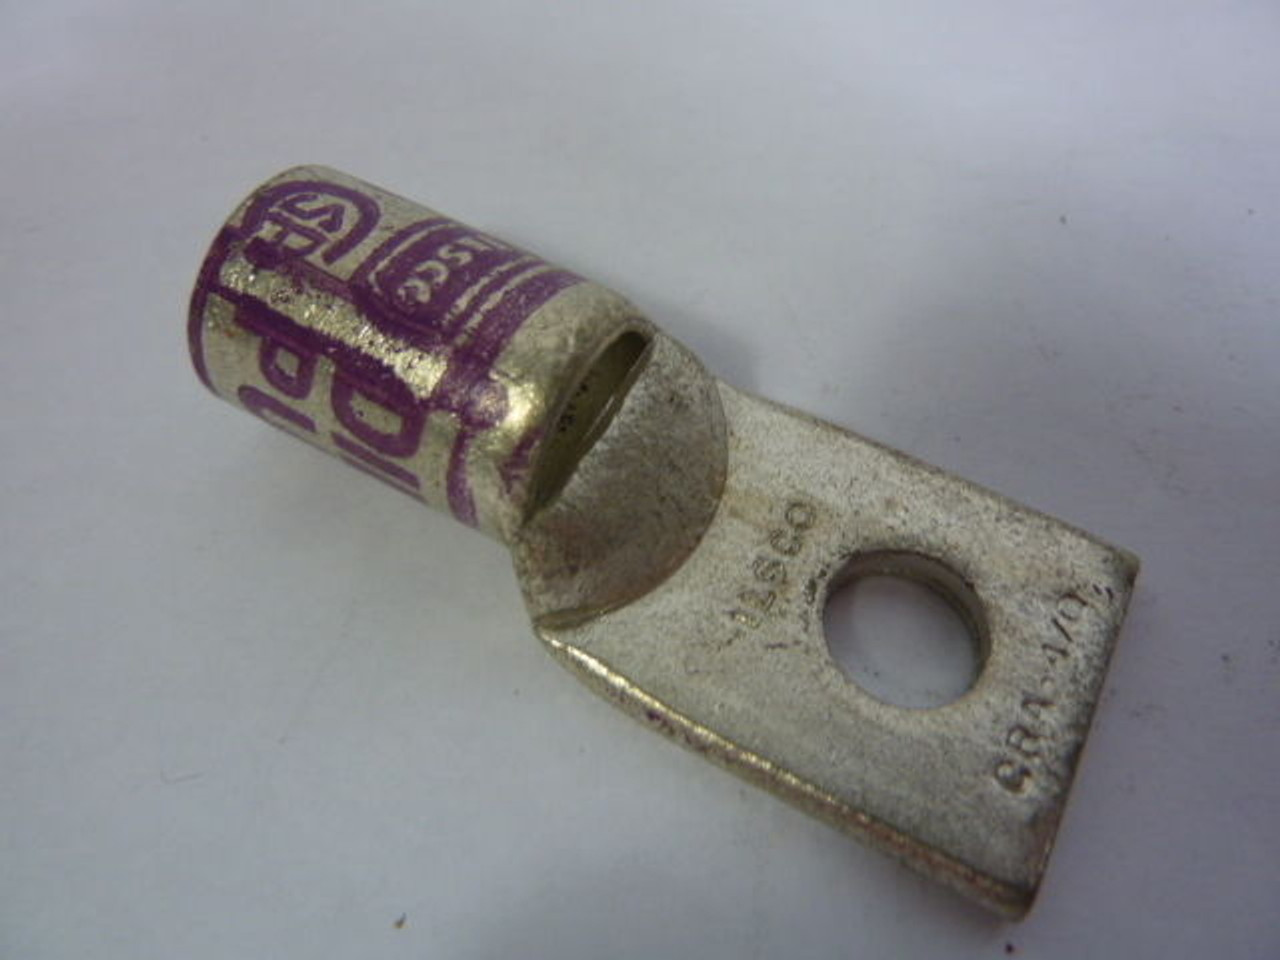 Ilsco CRA-4/0 (Purple) Compression Lug Copper 1-Hole ! NOP !